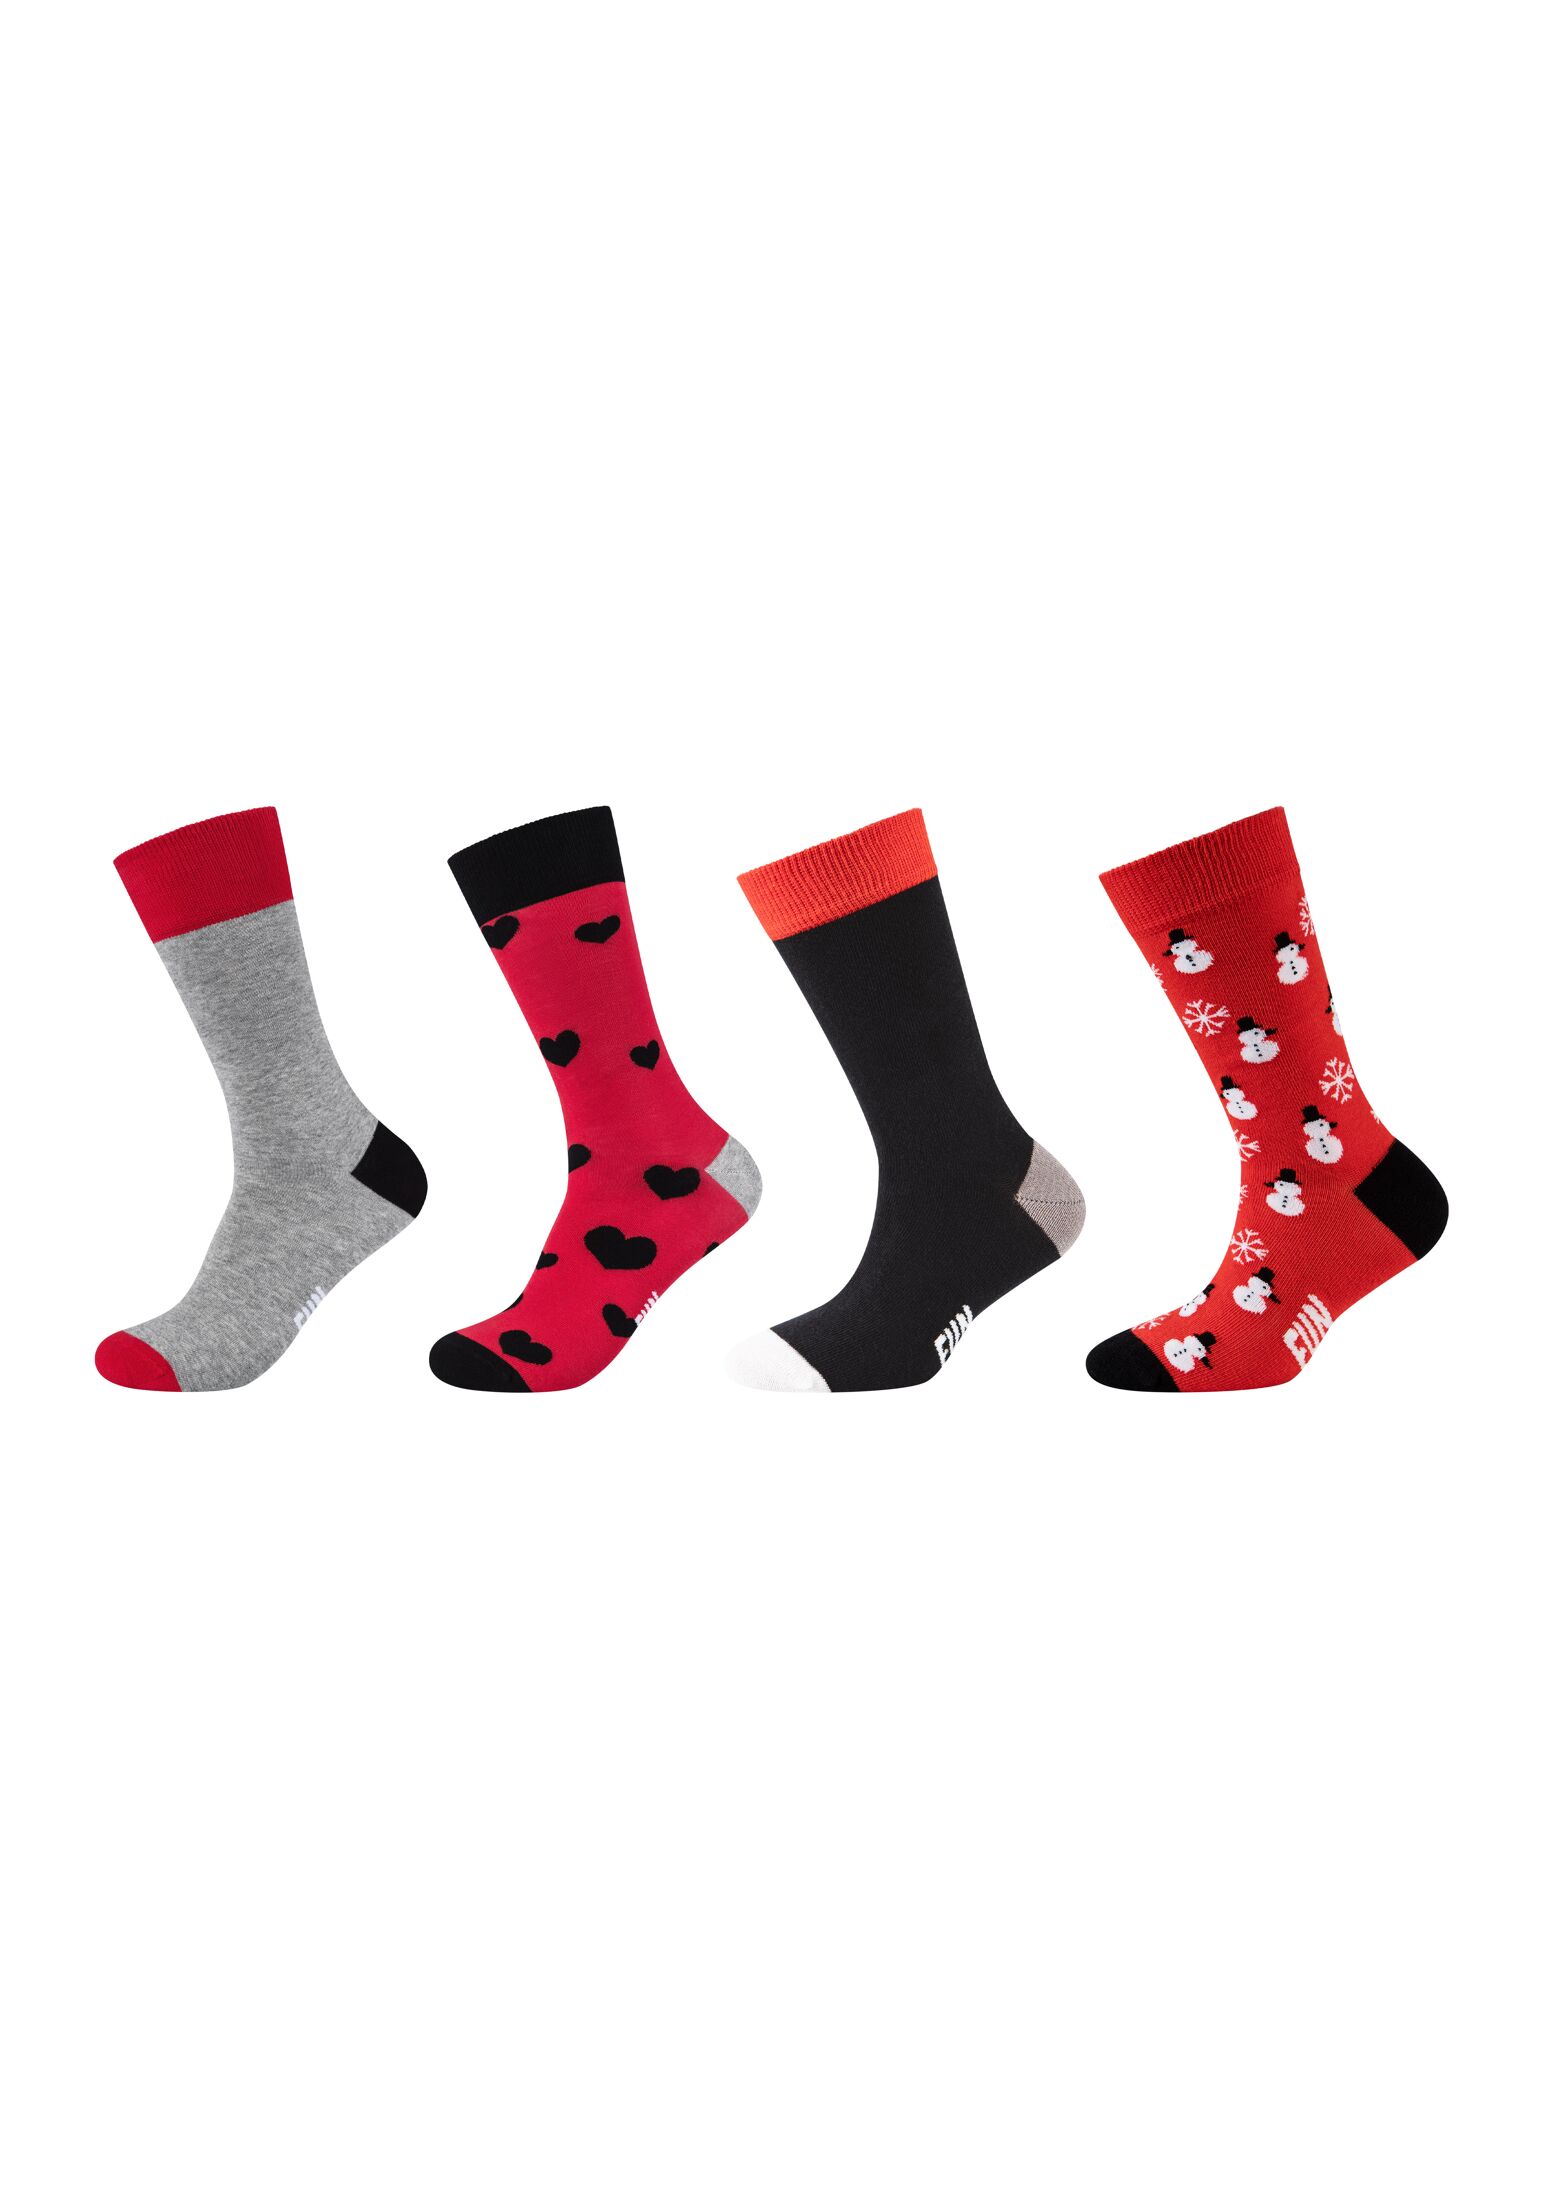 Носки Fun Socks 4 шт graphics, цвет mars red